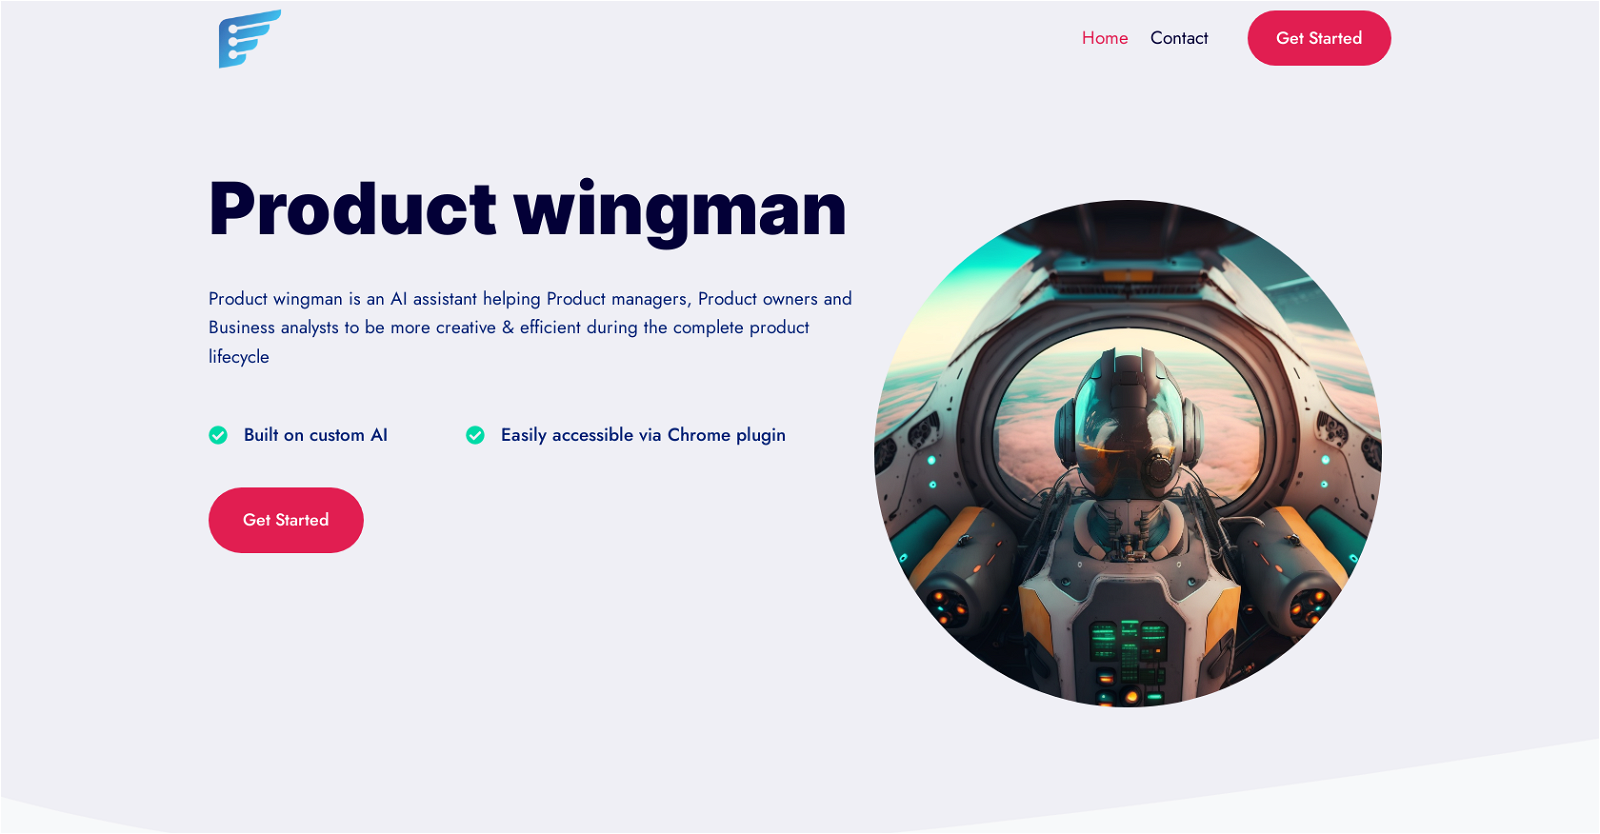 Product wingman